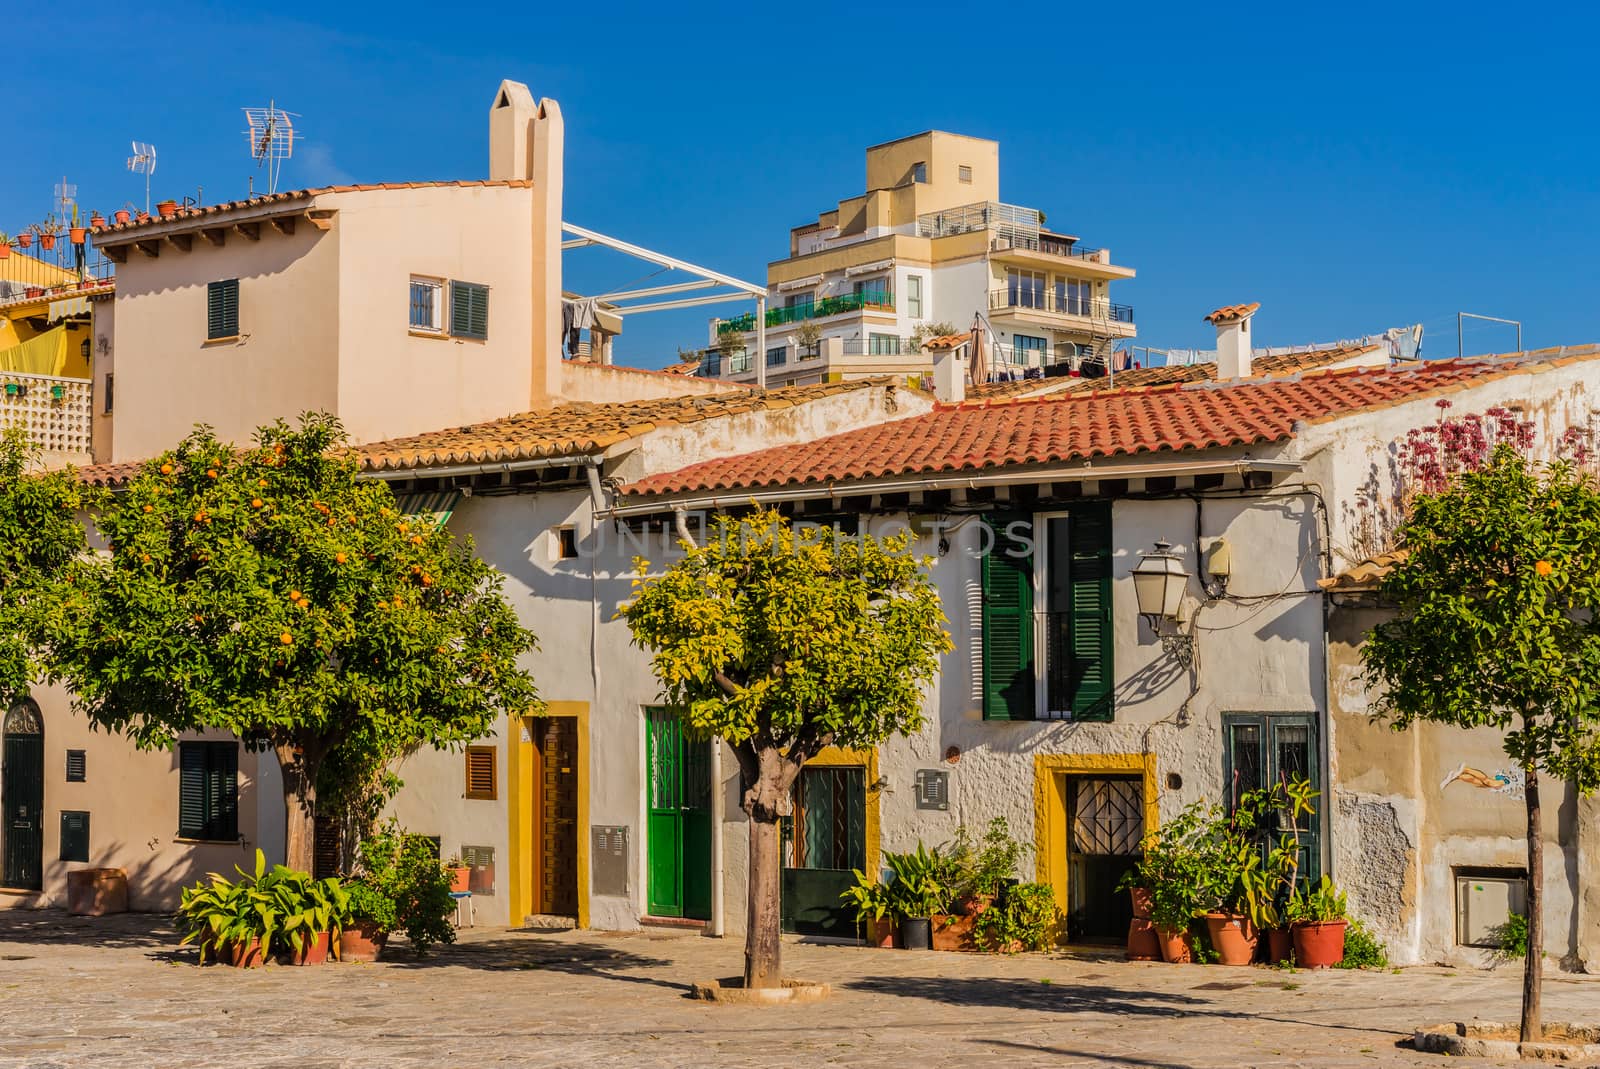 Mediterranean old town of Palma de Majorca, Spain Balearic islands